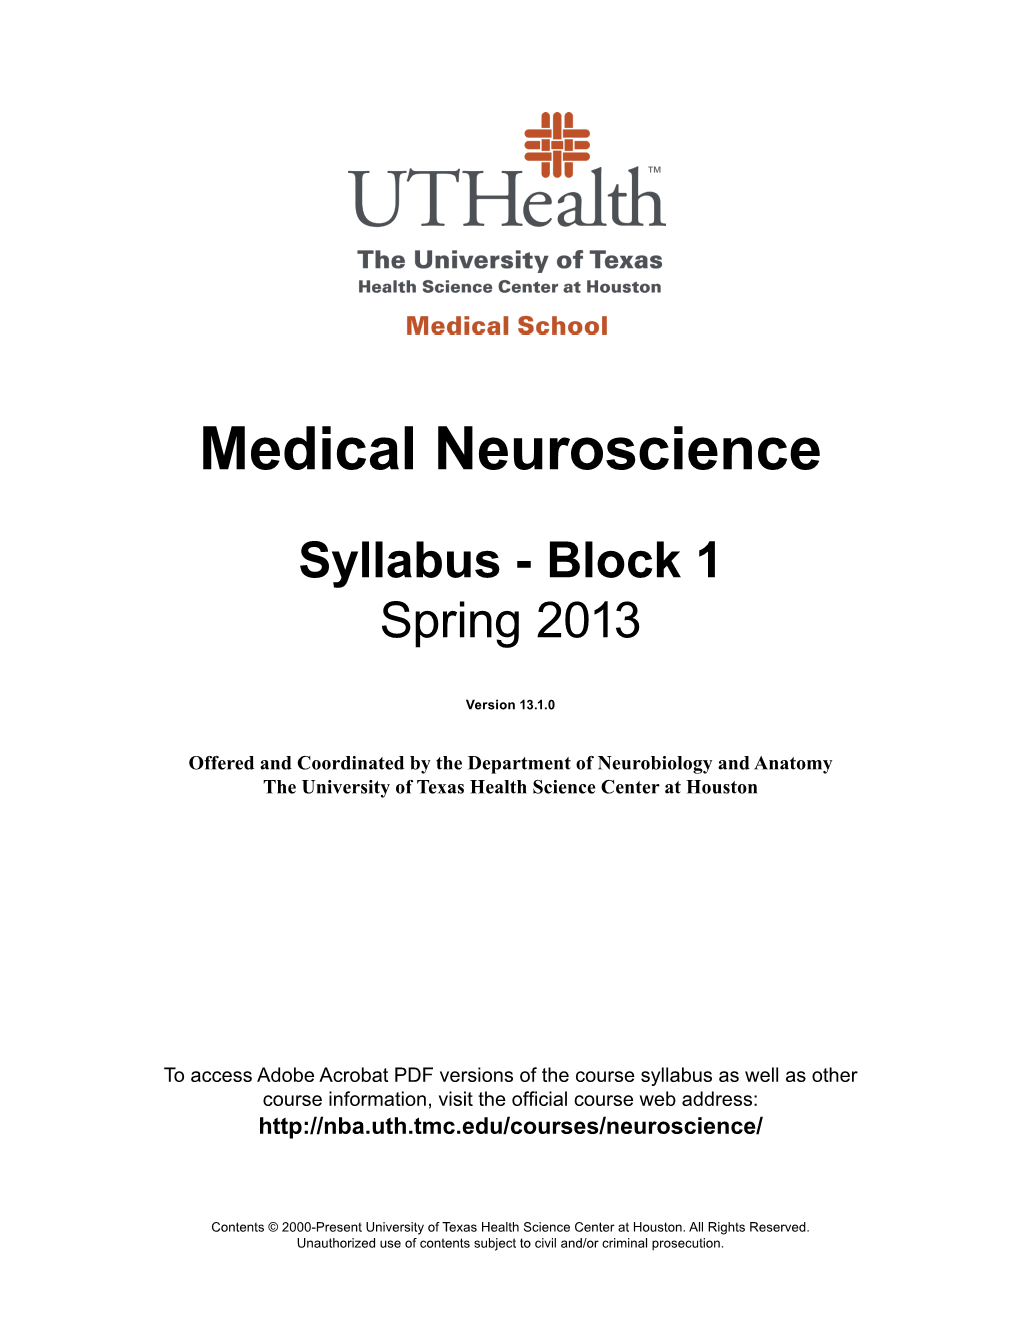 Neuroscience 2013 Syllabus V13.1.0